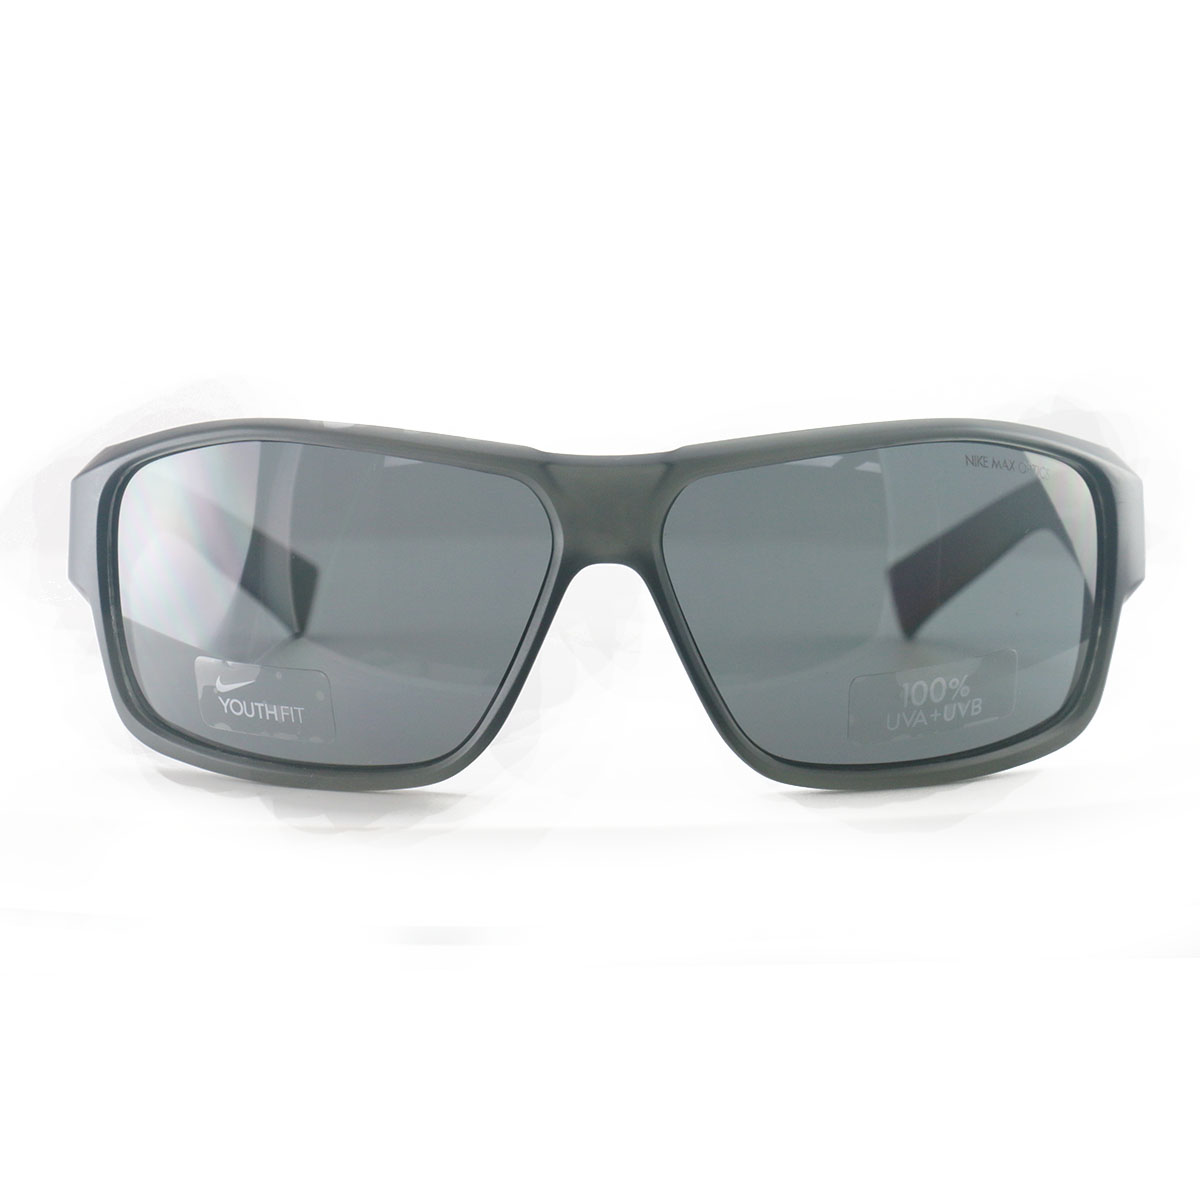 Nike Reverse Sunglasses EV0819 068 62 12 125 | eBay